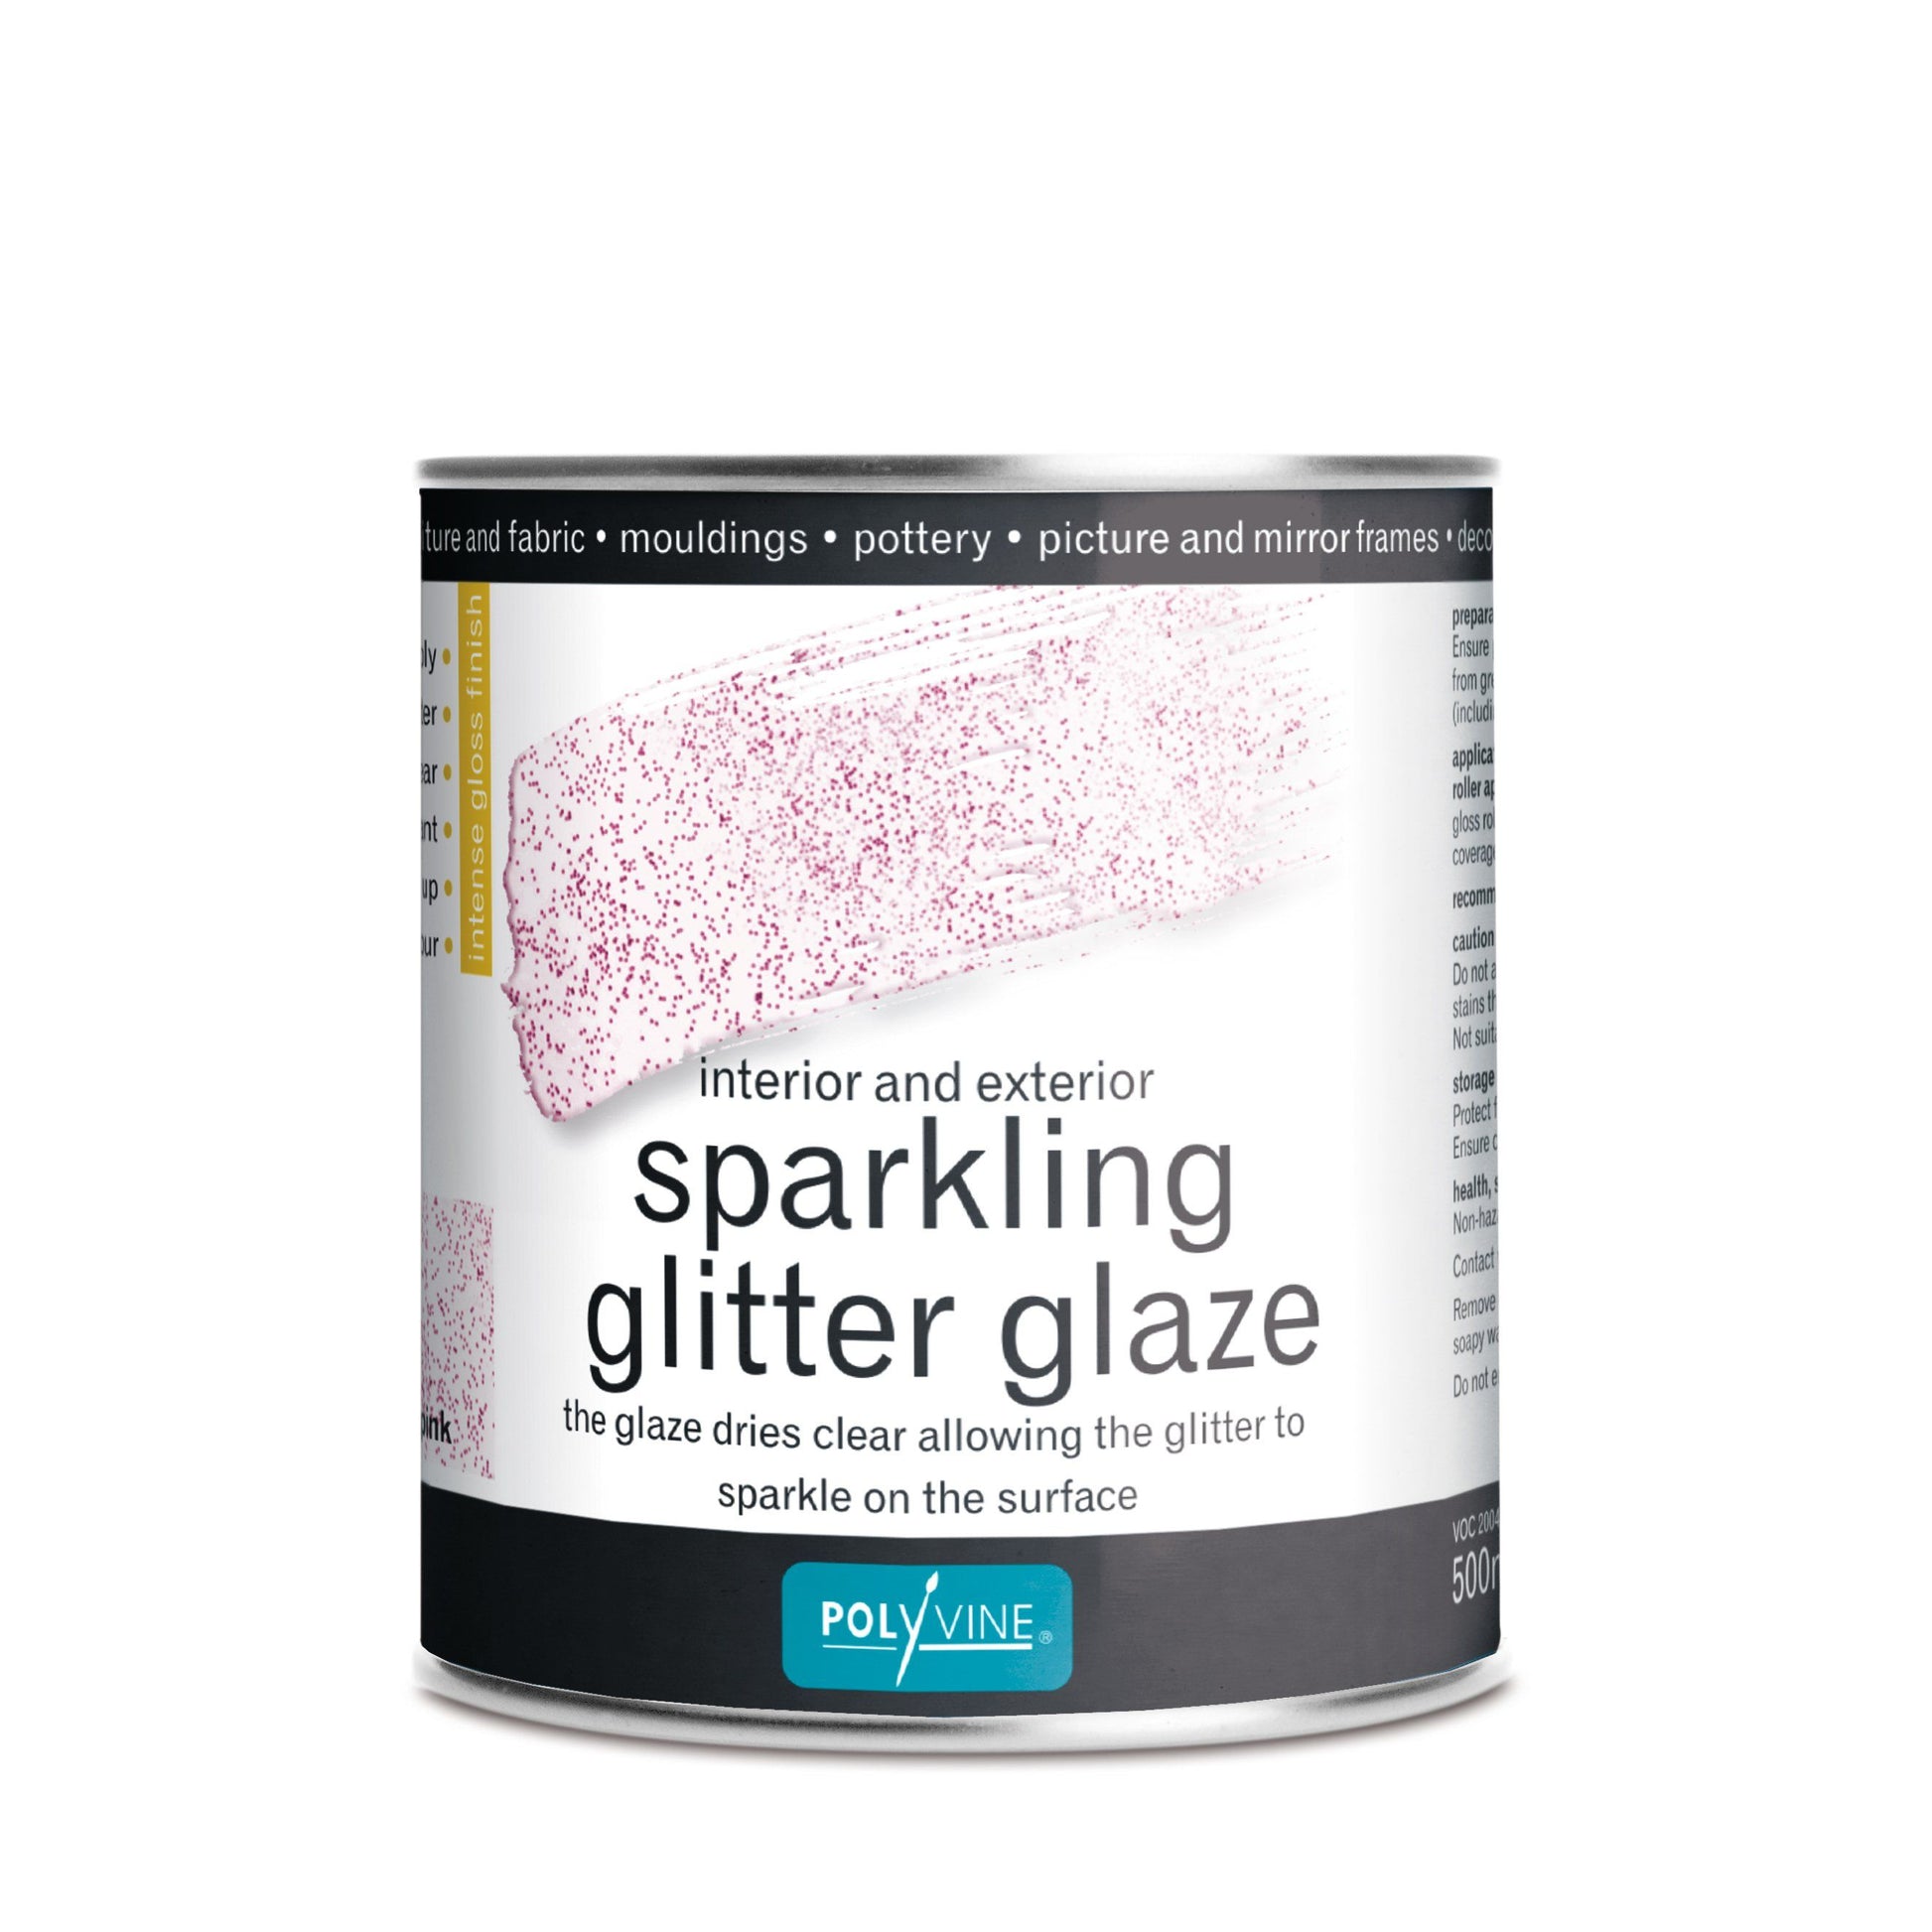 Polyvine -Sparkling Glitter Glaze - Pink - High Gloss Finish - 500ml